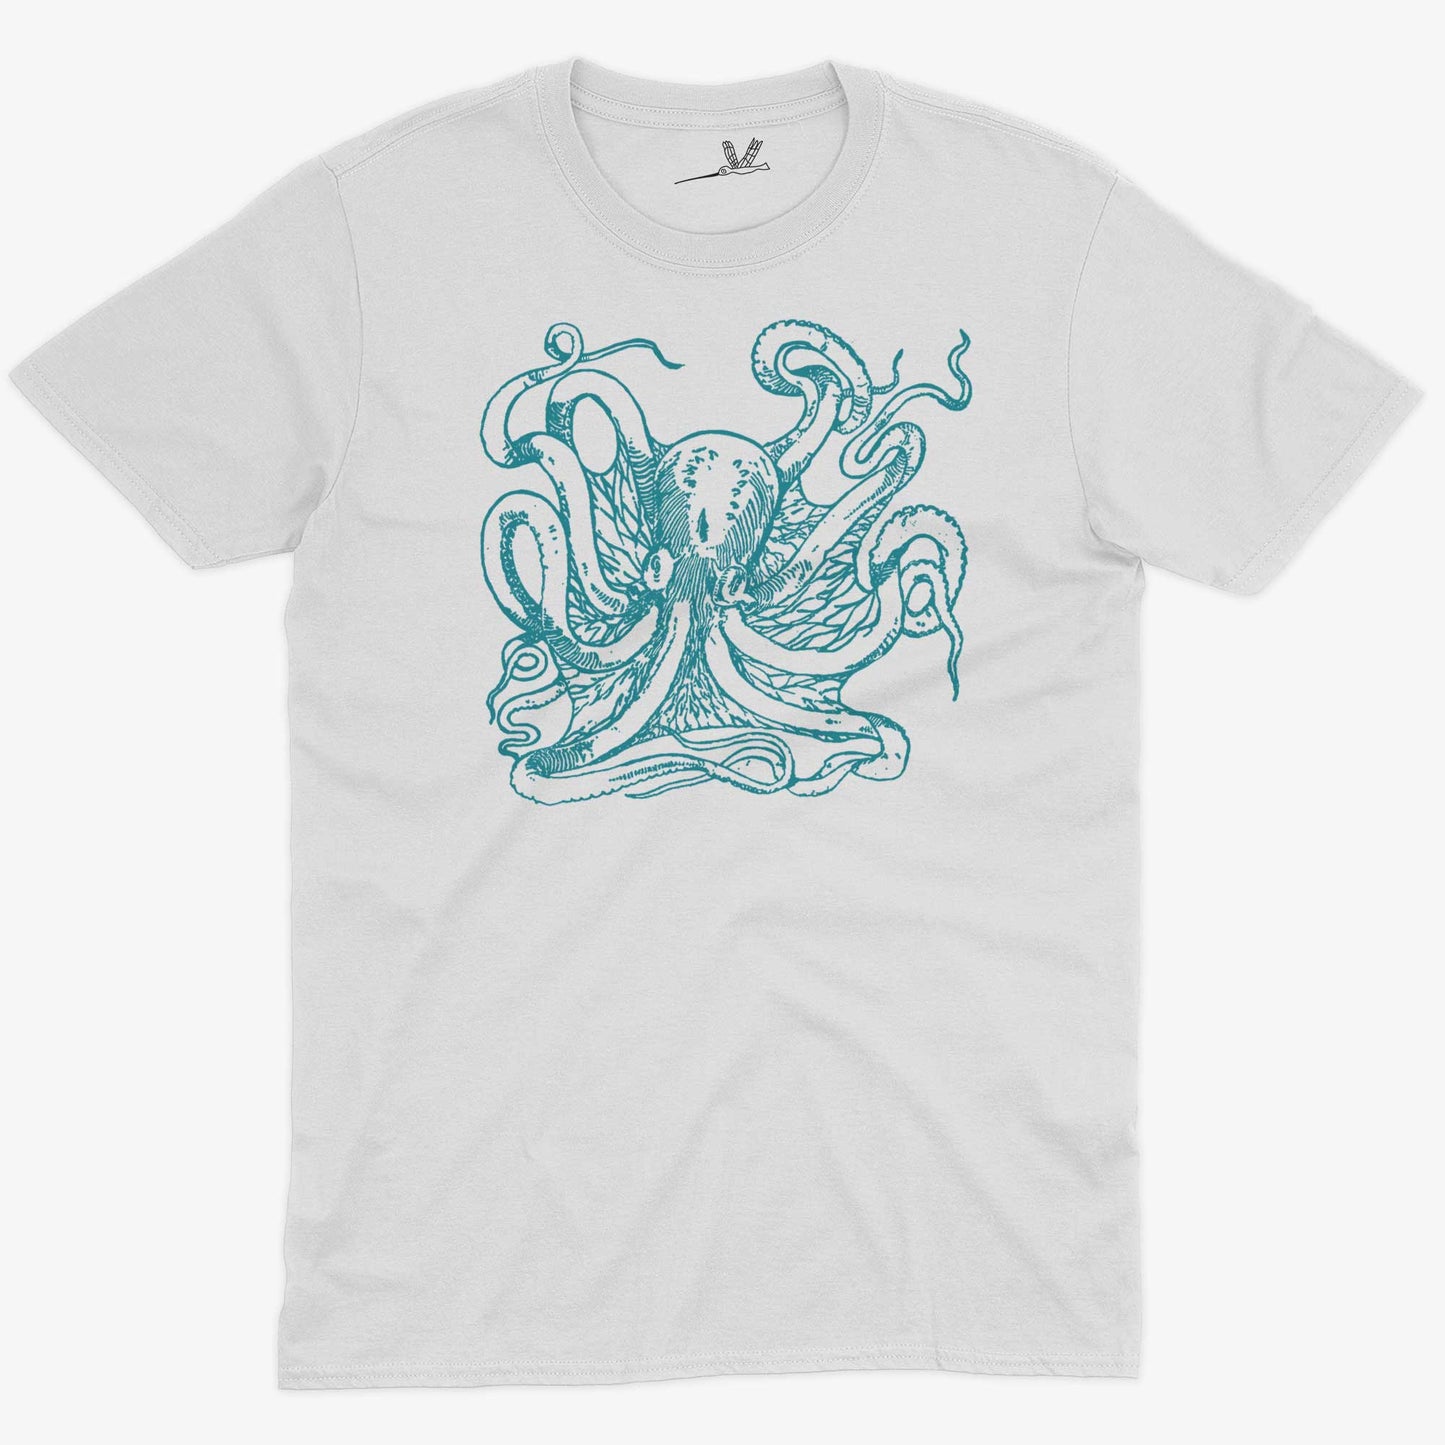 Giant Octopus Unisex Or Women's Cotton T-shirt-White-Unisex